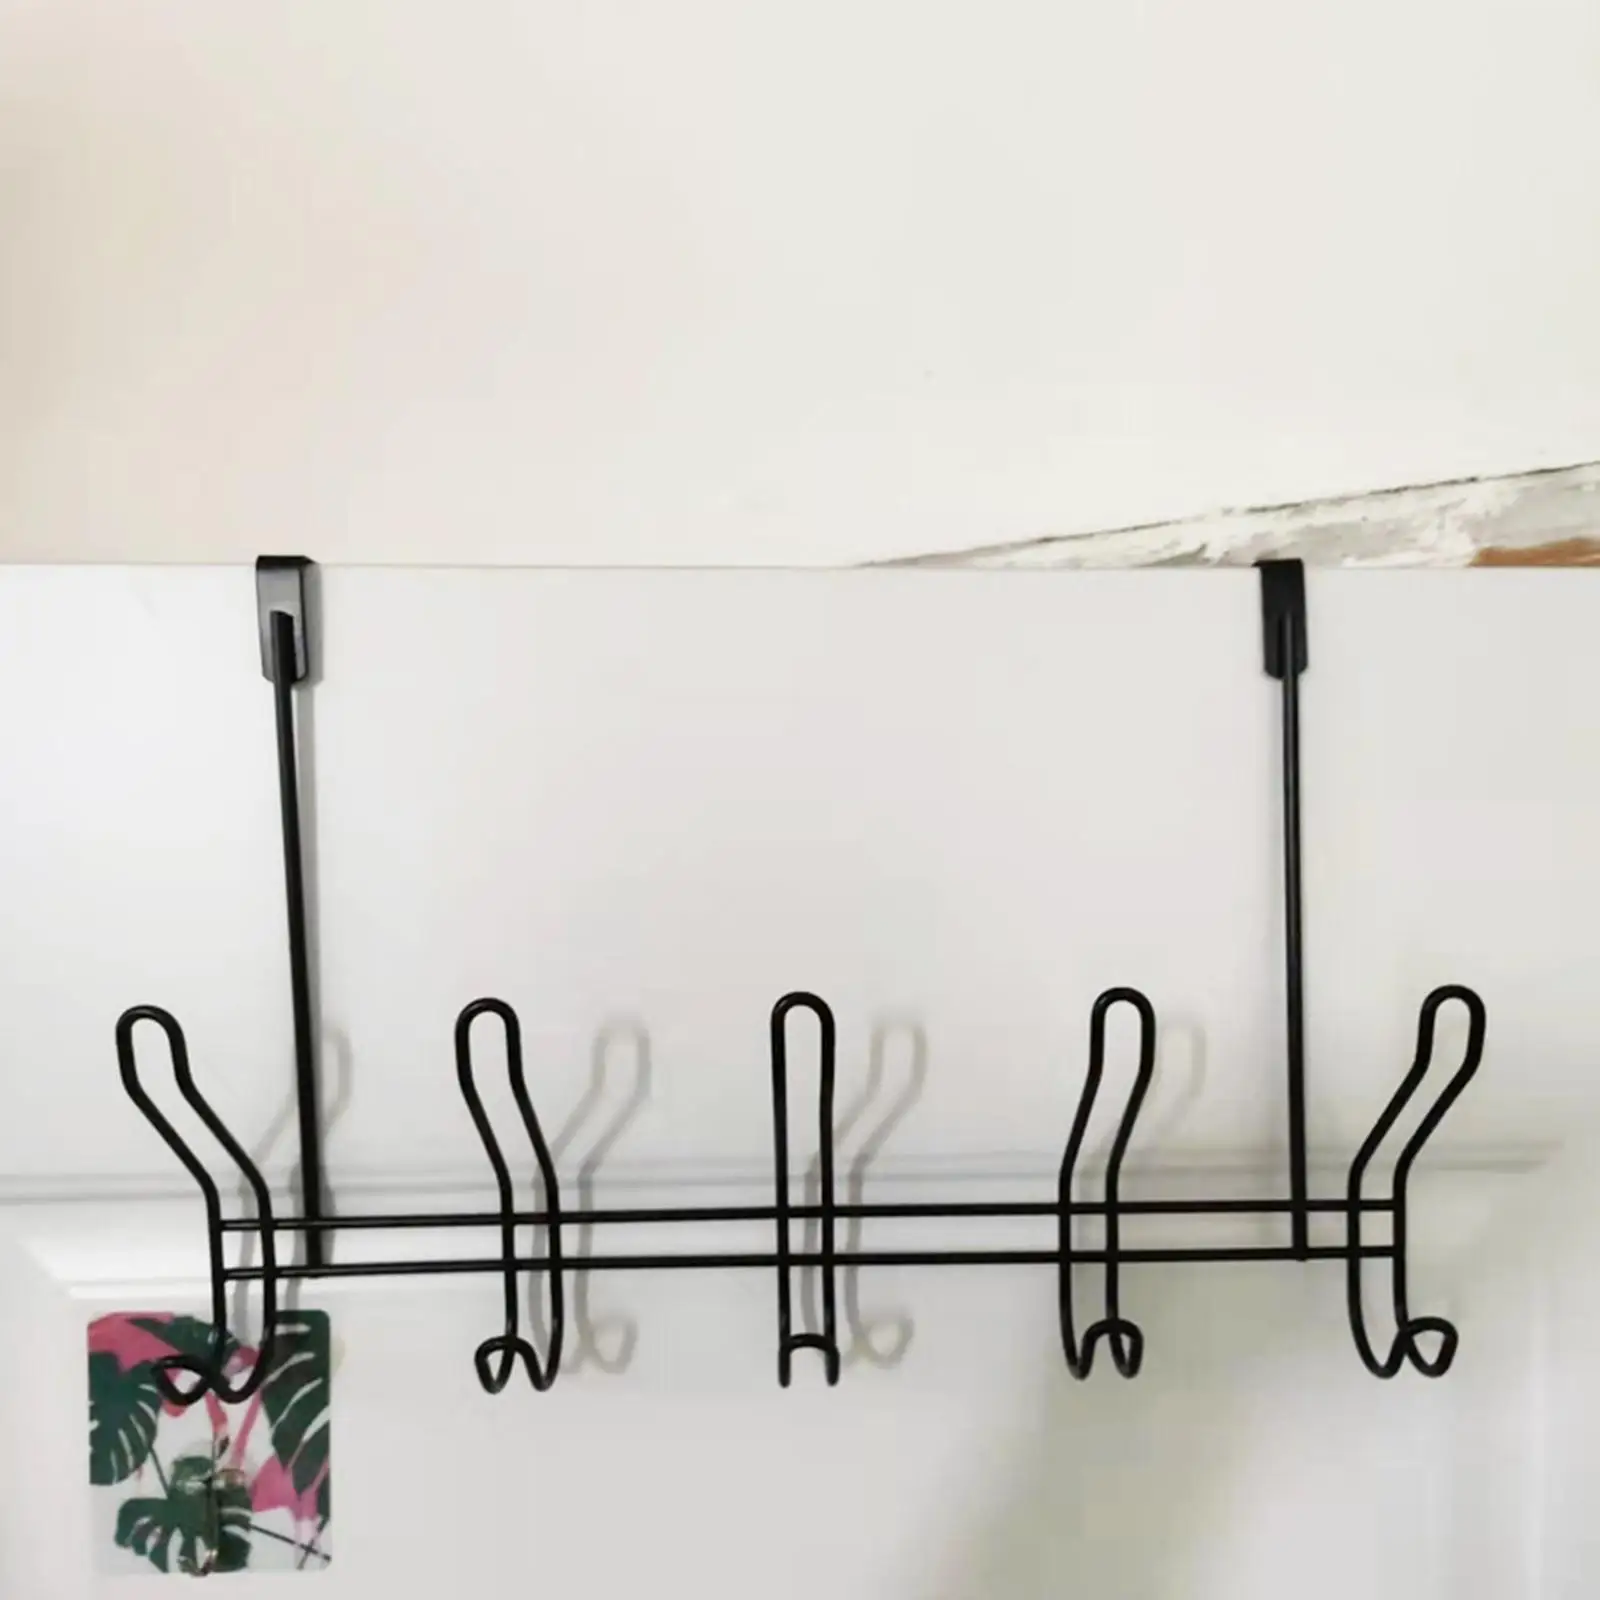 Metal 5 Hooks Clothing Coat Towel Hanger Rack Holder Shelf Over Door For Bathroom Kitchen Holder